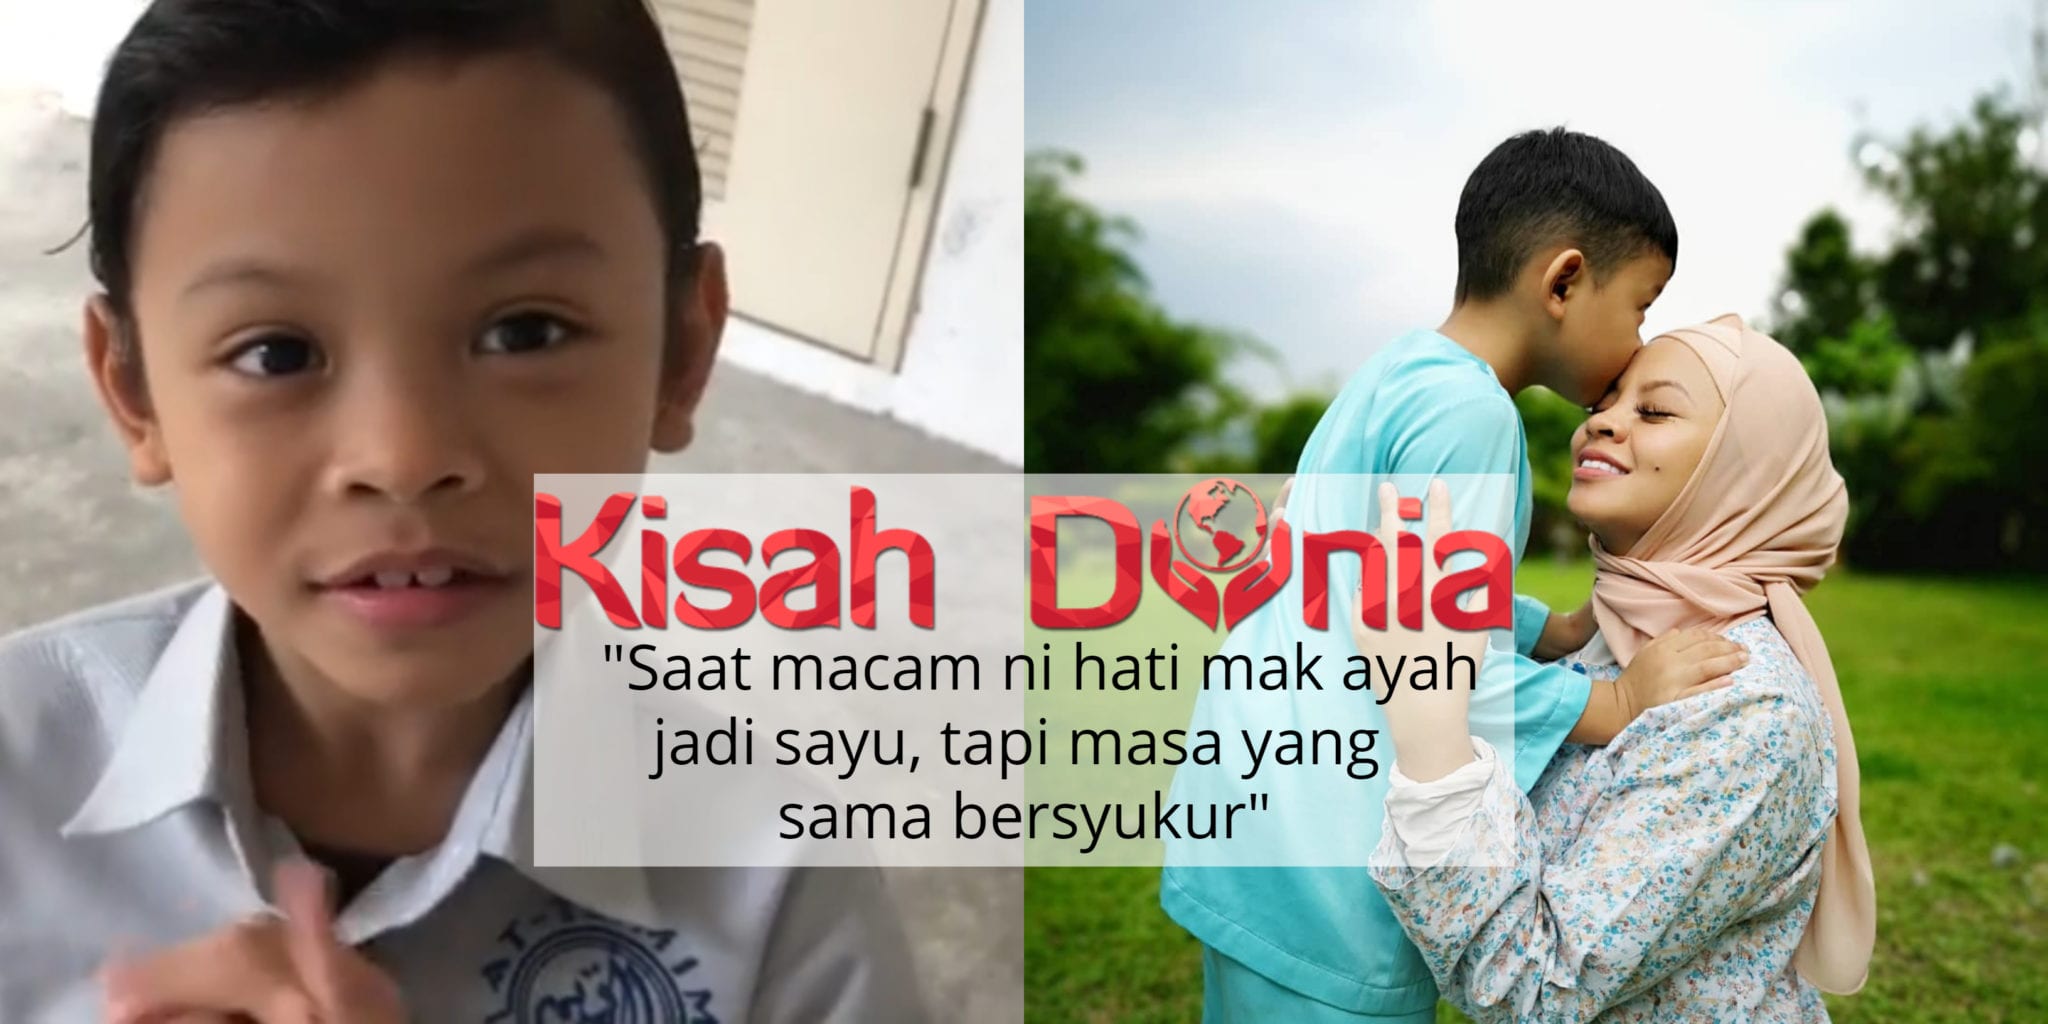 [VIDEO] Hari Pertama Sekolah, Anak Shuib Dah Bagi Soalan 